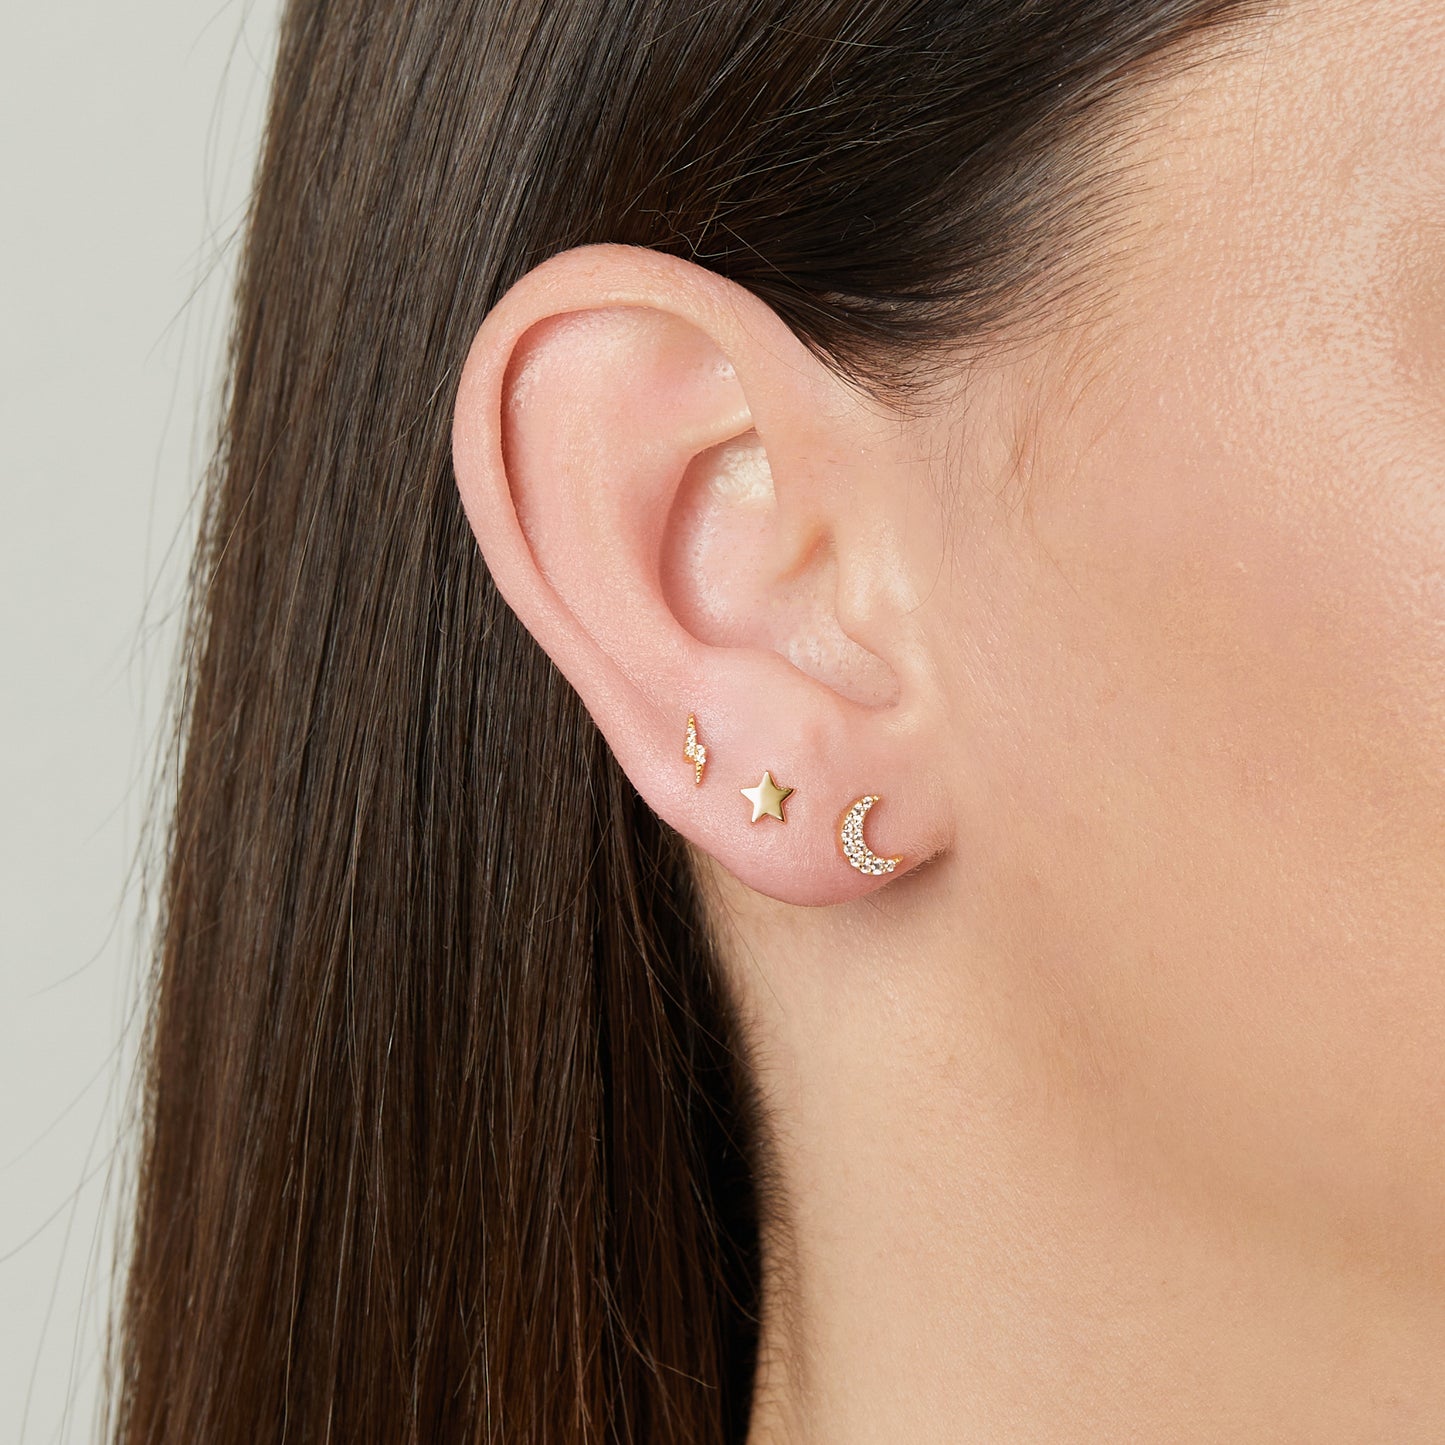 Studded Moon Stud Earrings